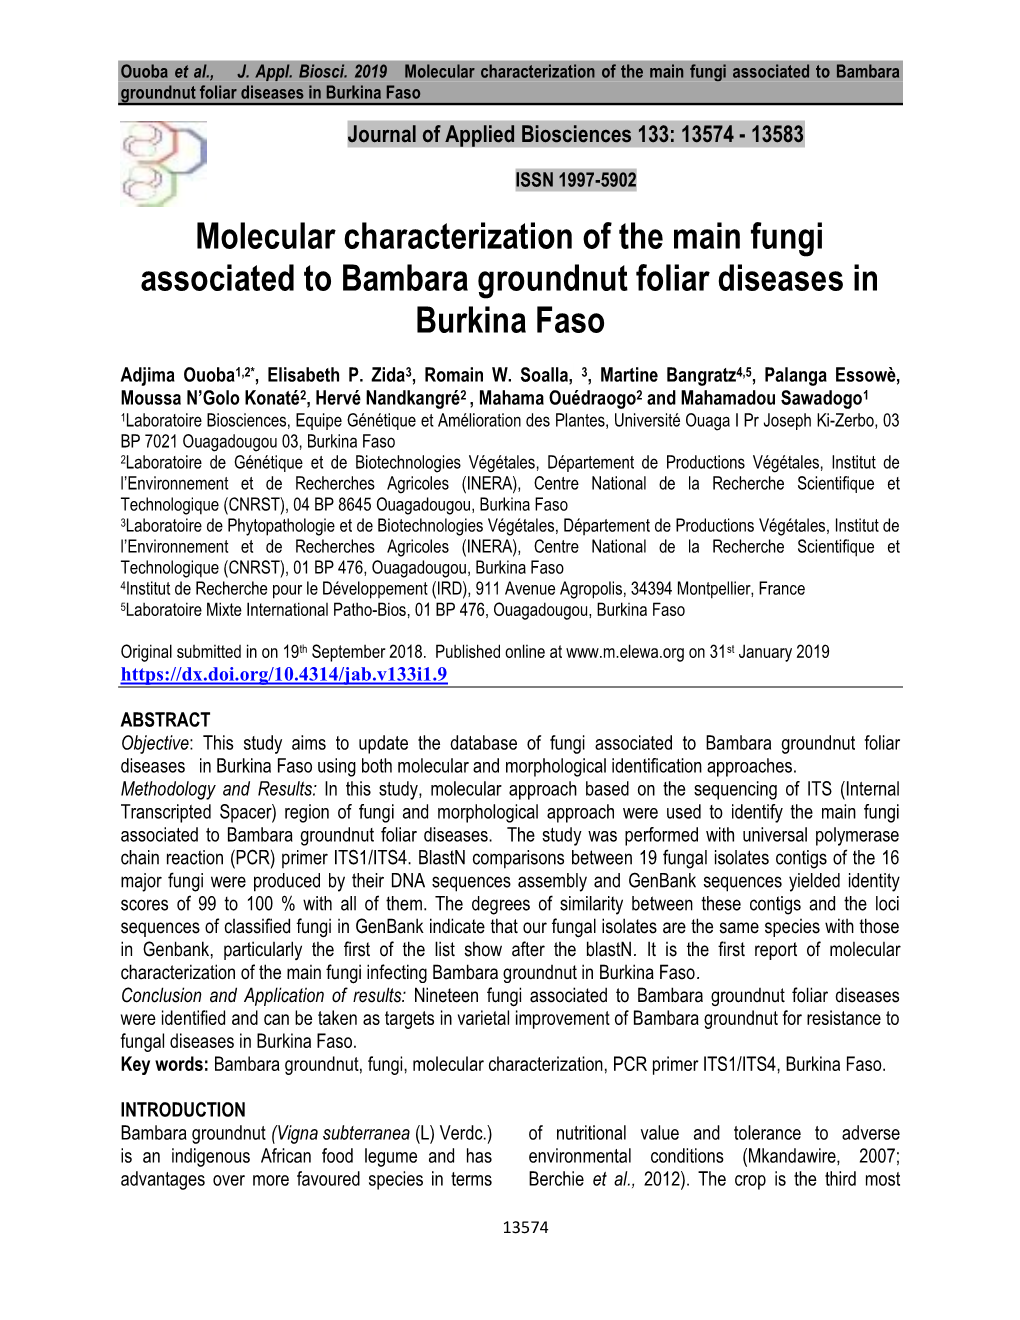 Molecular Characterization of the Main Fungi Associated to Bambara Groundnut Foliar Diseases in Burkina Faso Journal of Applied Biosciences 133: 13574 - 13583